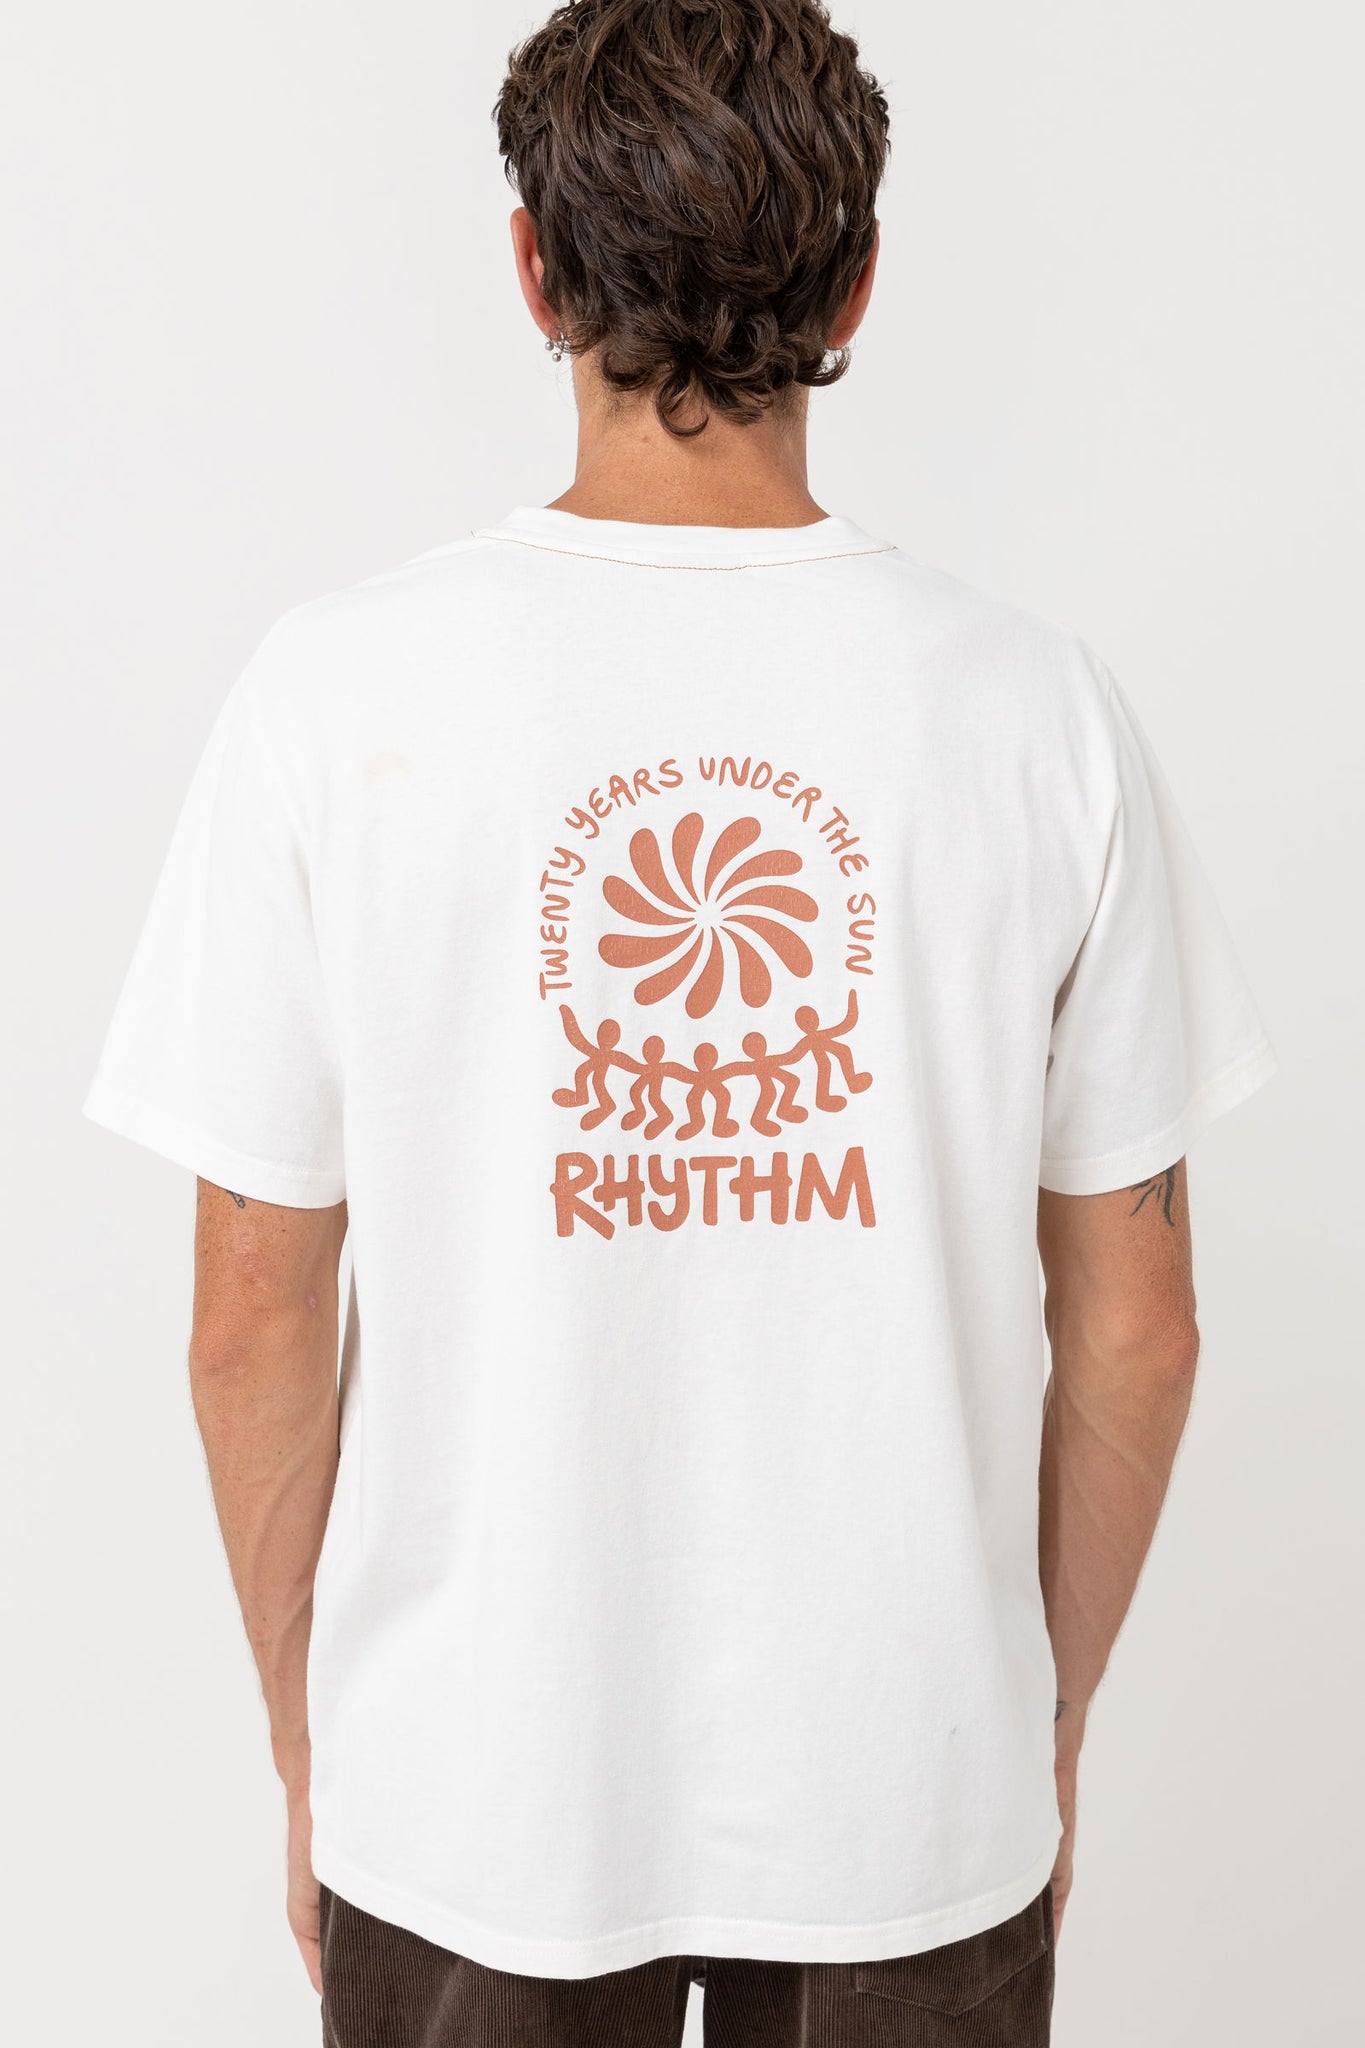 Rhythm 20 Years Under the Sun Vintage SS T-Shirt Kempt Mens Clothing Store Athens Georgia